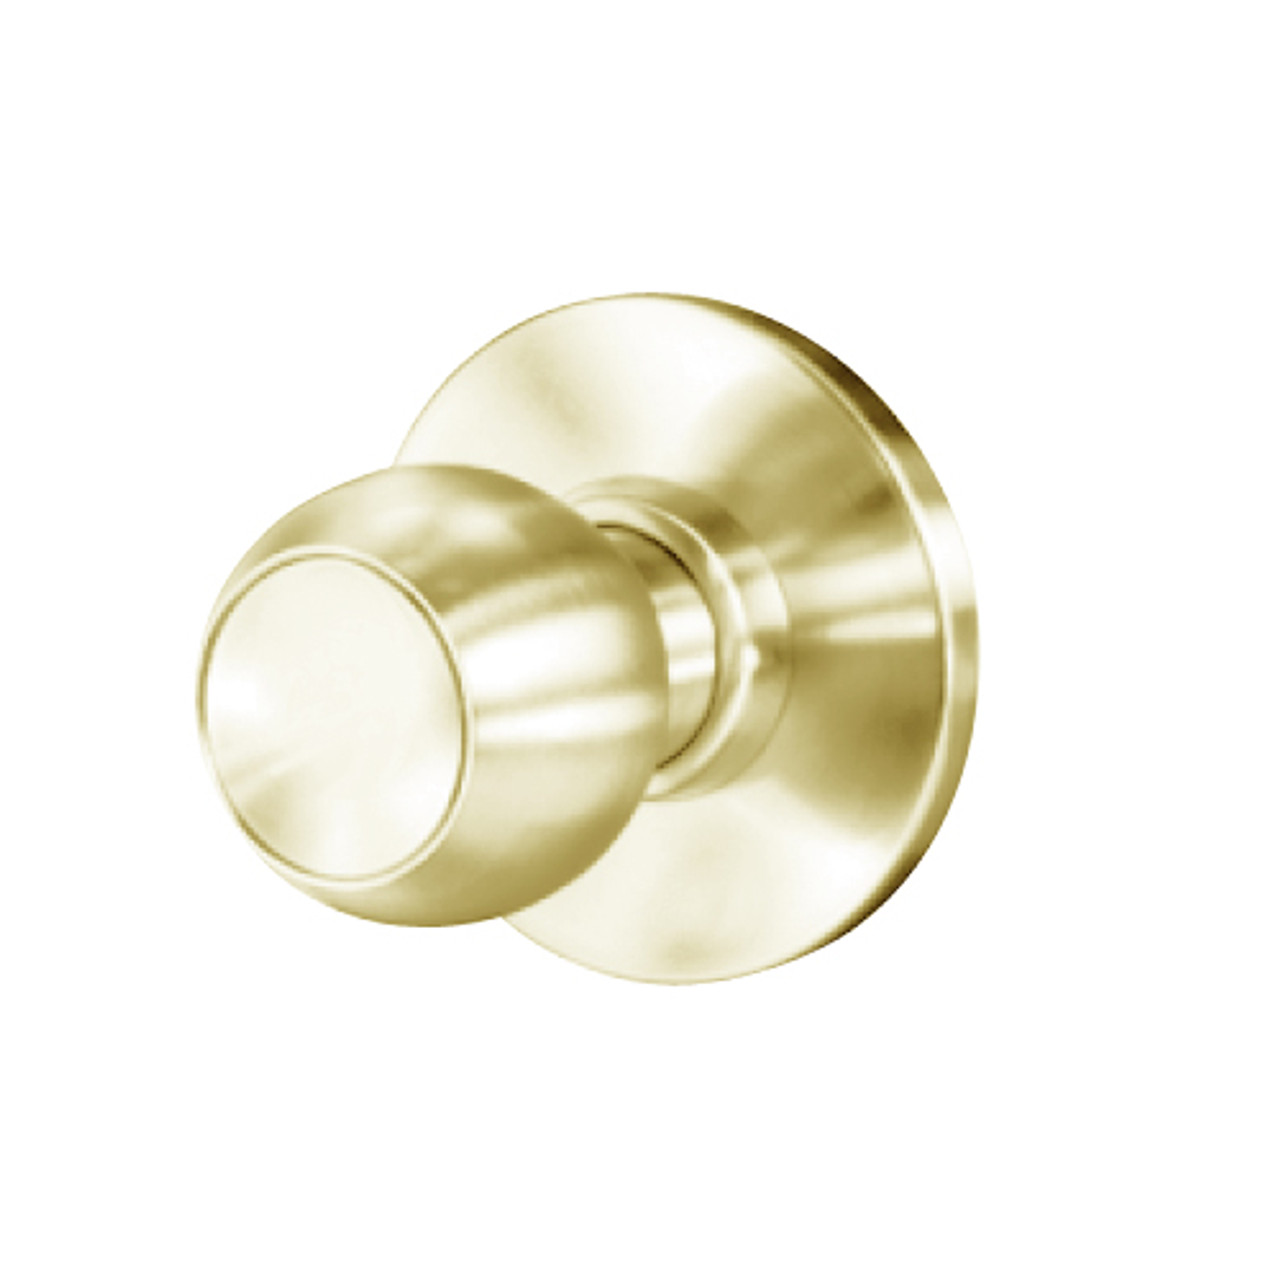 8K30N4AS3606 Best 8K Series Passage Heavy Duty Cylindrical Knob Locks with Round Style in Satin Brass